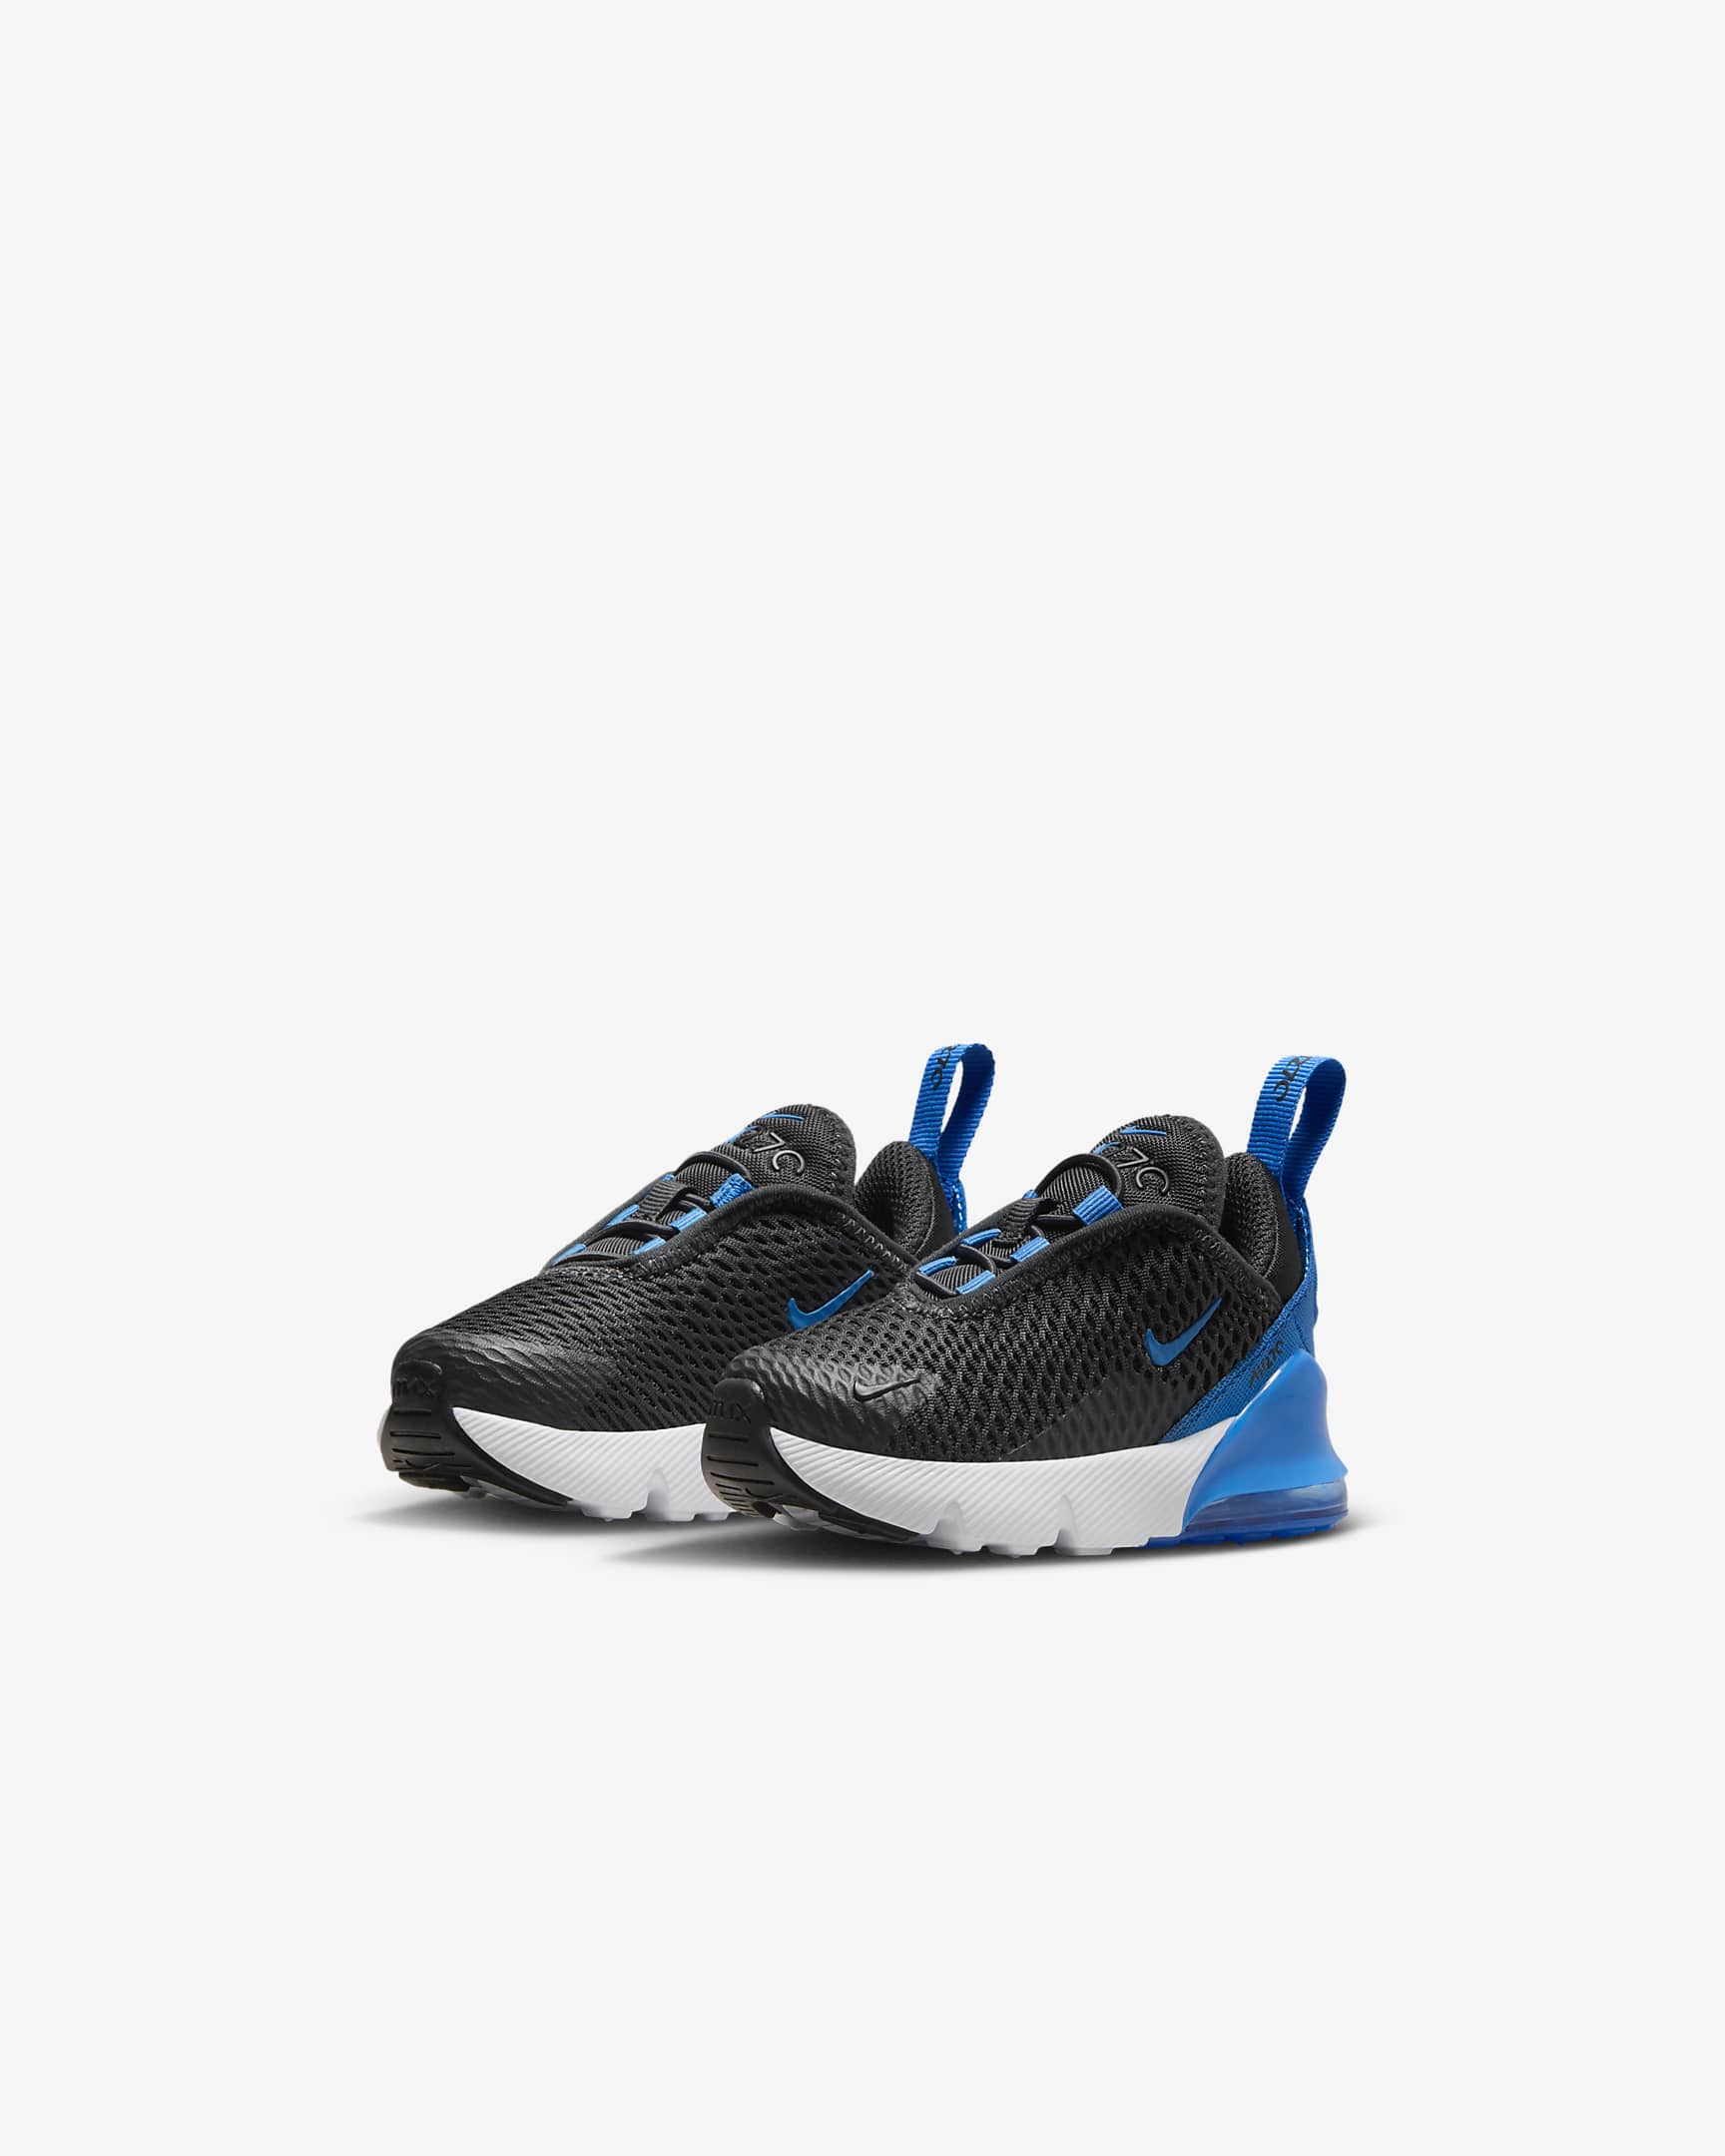 Nike Air Max 270 Baby/Toddler Shoe - Anthracite/Black/White/Light Photo Blue